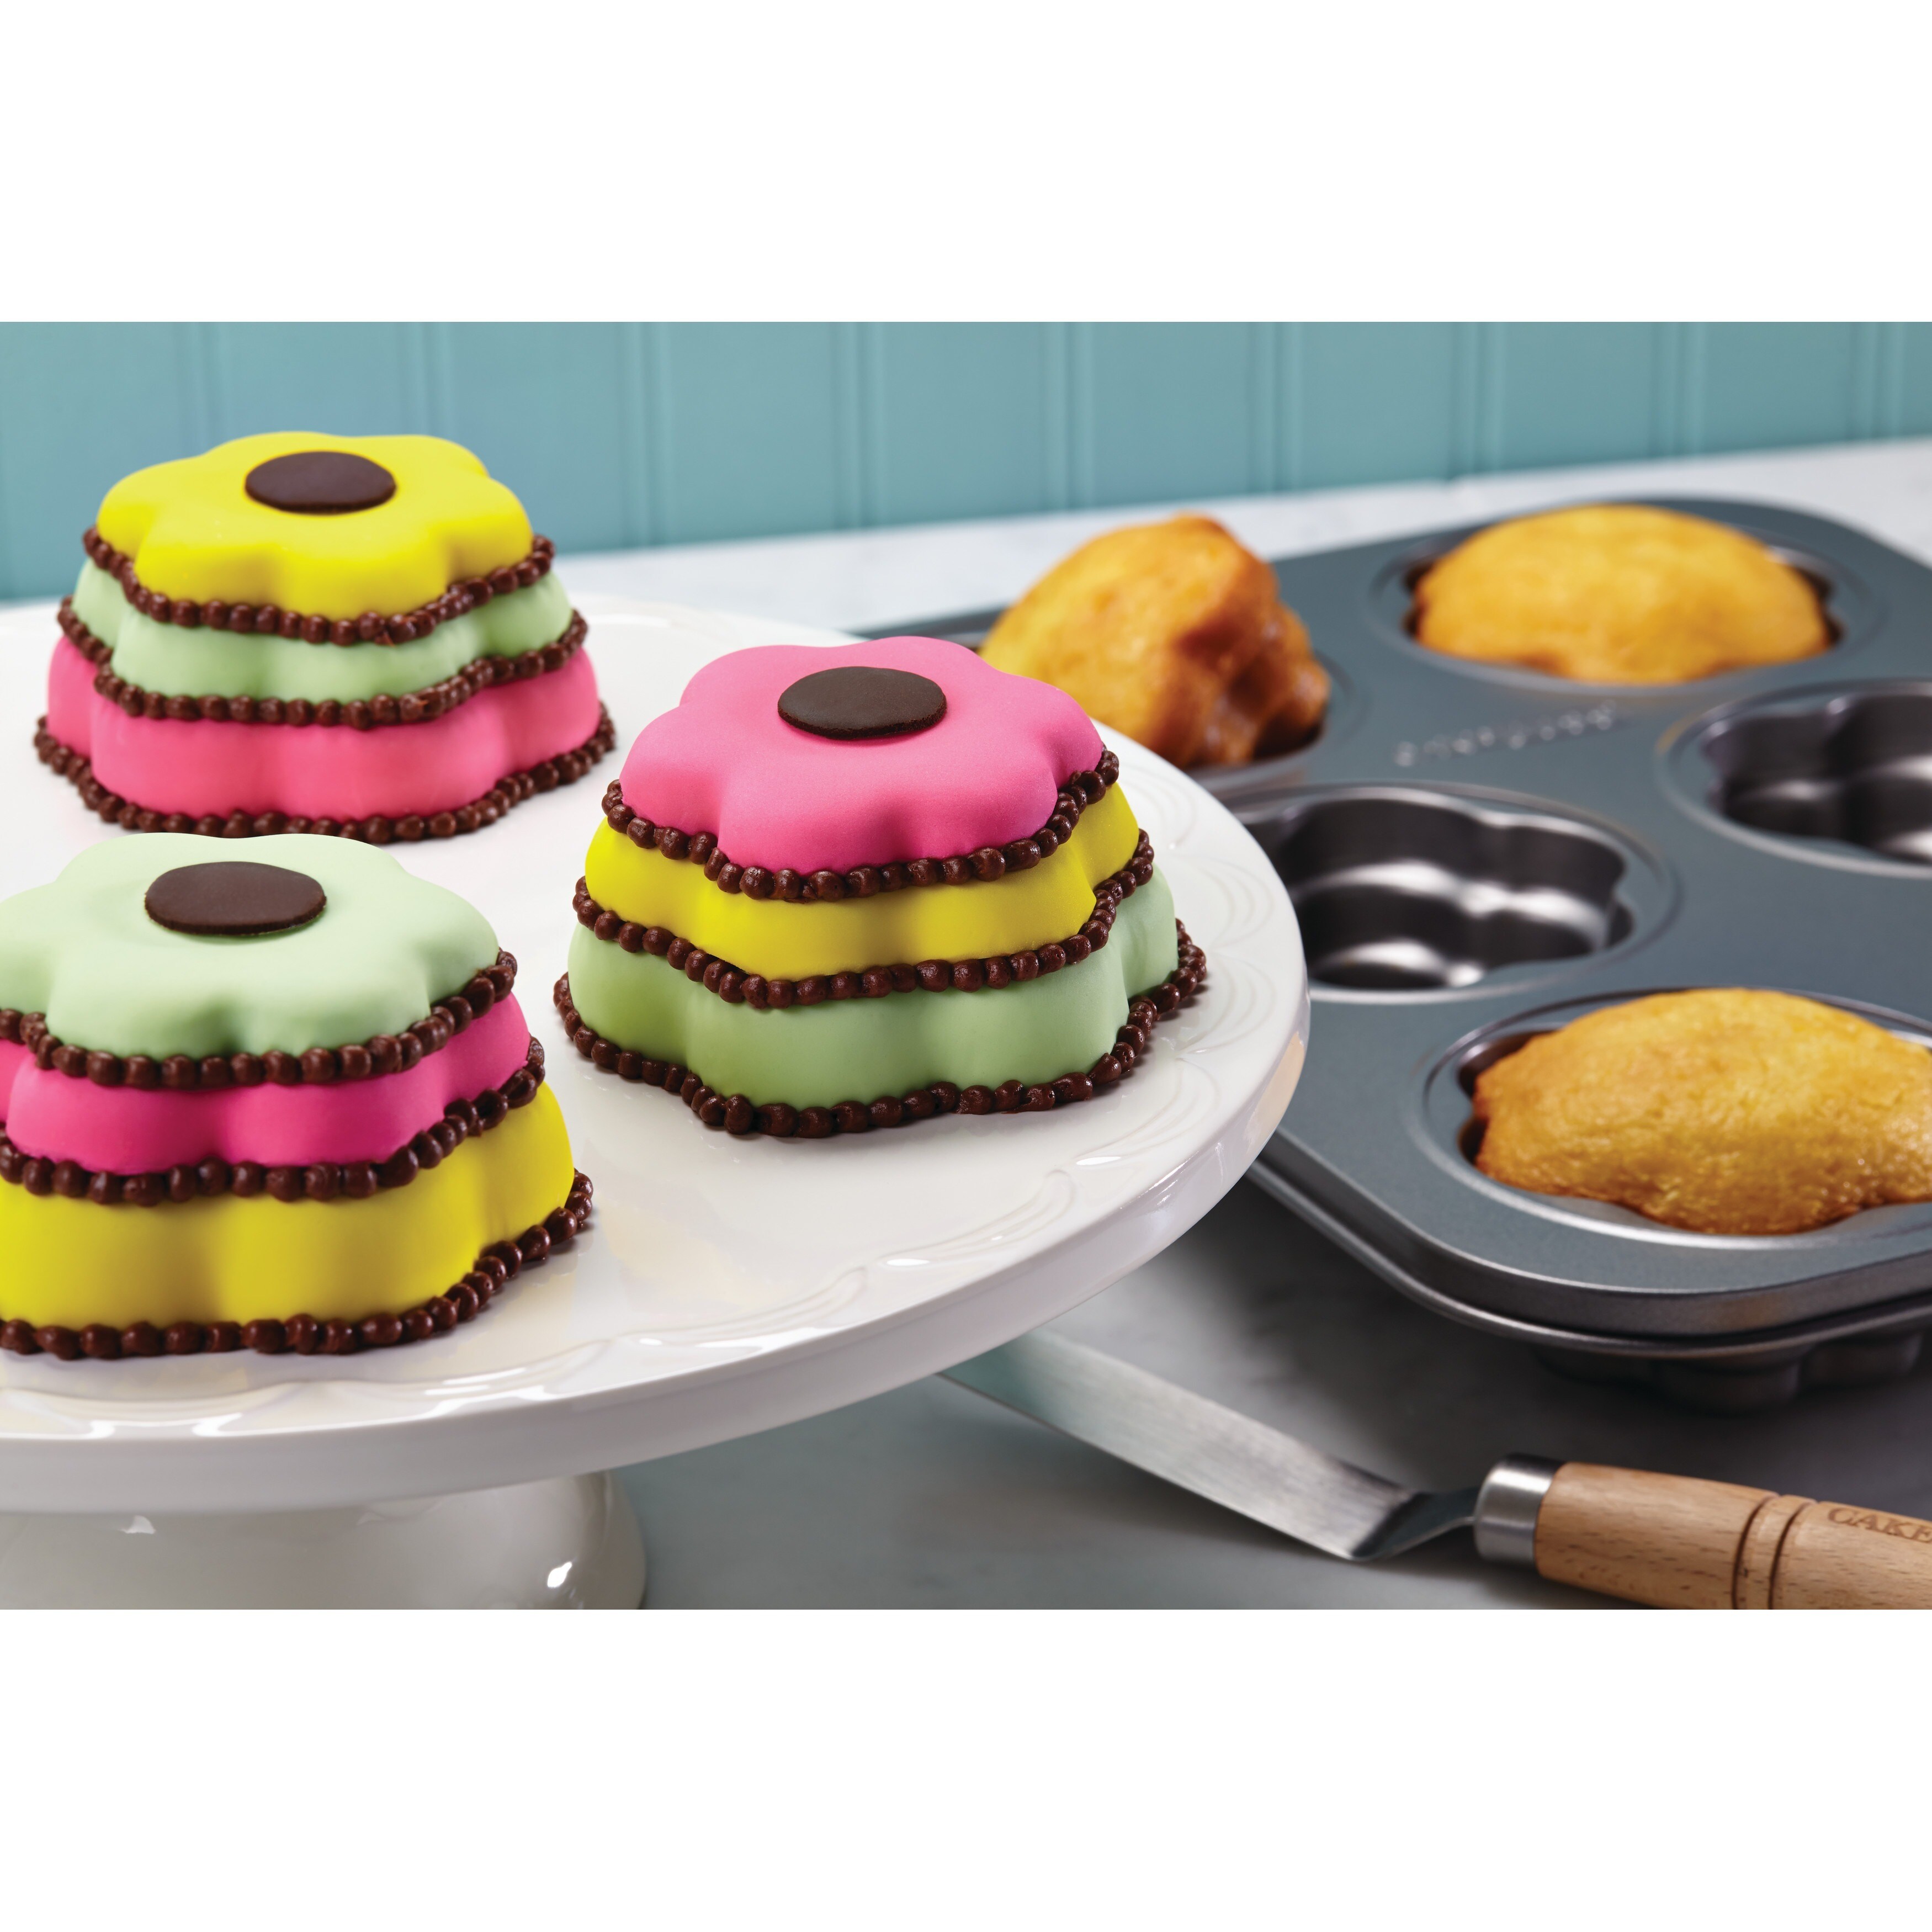 Calphalon Nonstick Bakeware Set, 10-Piece Set Includes Baking Sheet, Cookie  Sheet, Cake Pans, Muffin Pan, and More, Dishwasher Safe, Silv